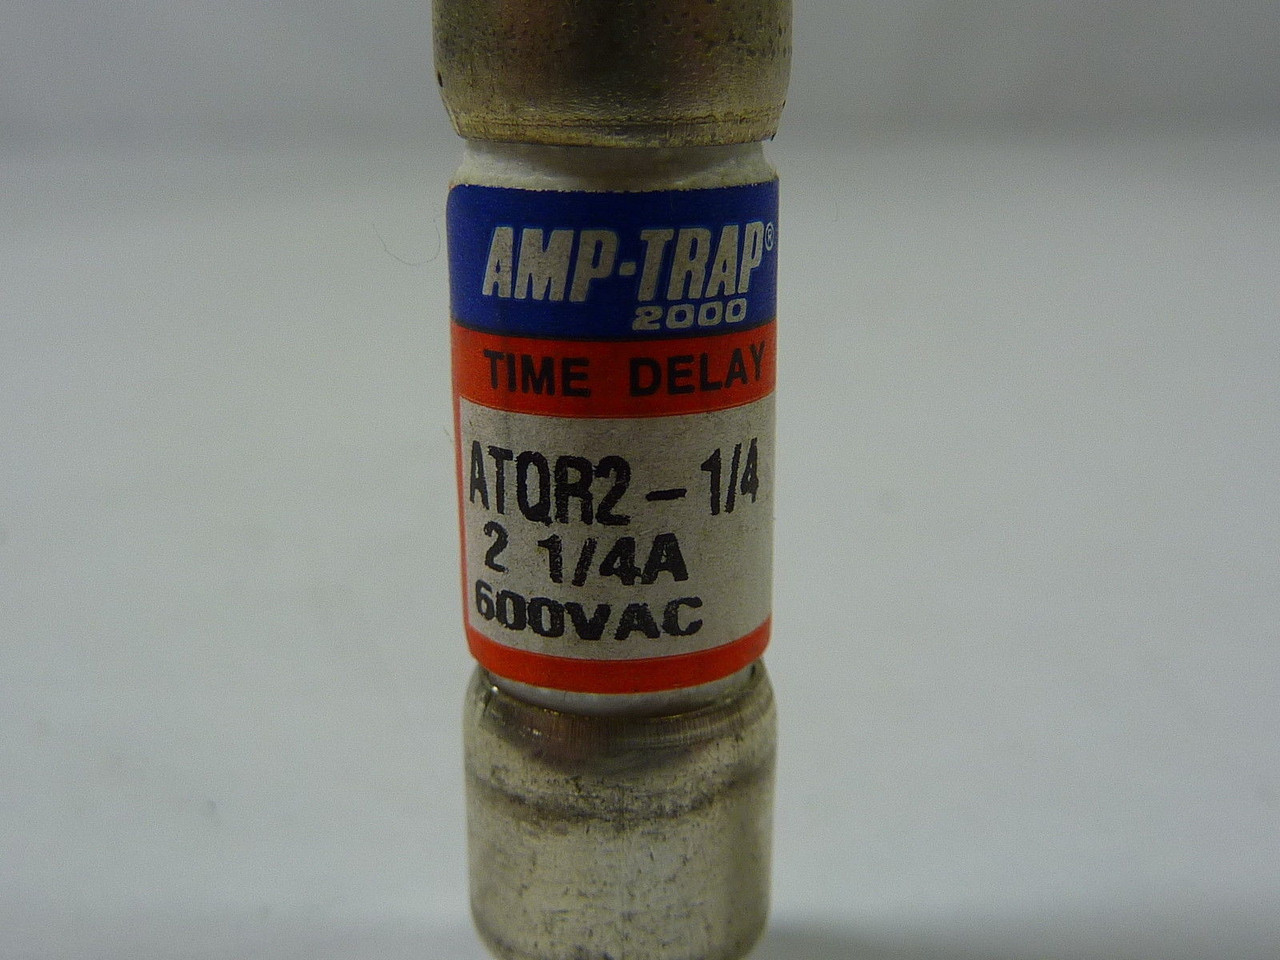 Amp-Trap ATQR2-1/4 Time Delay Fuse 2-1/4A 600V USED